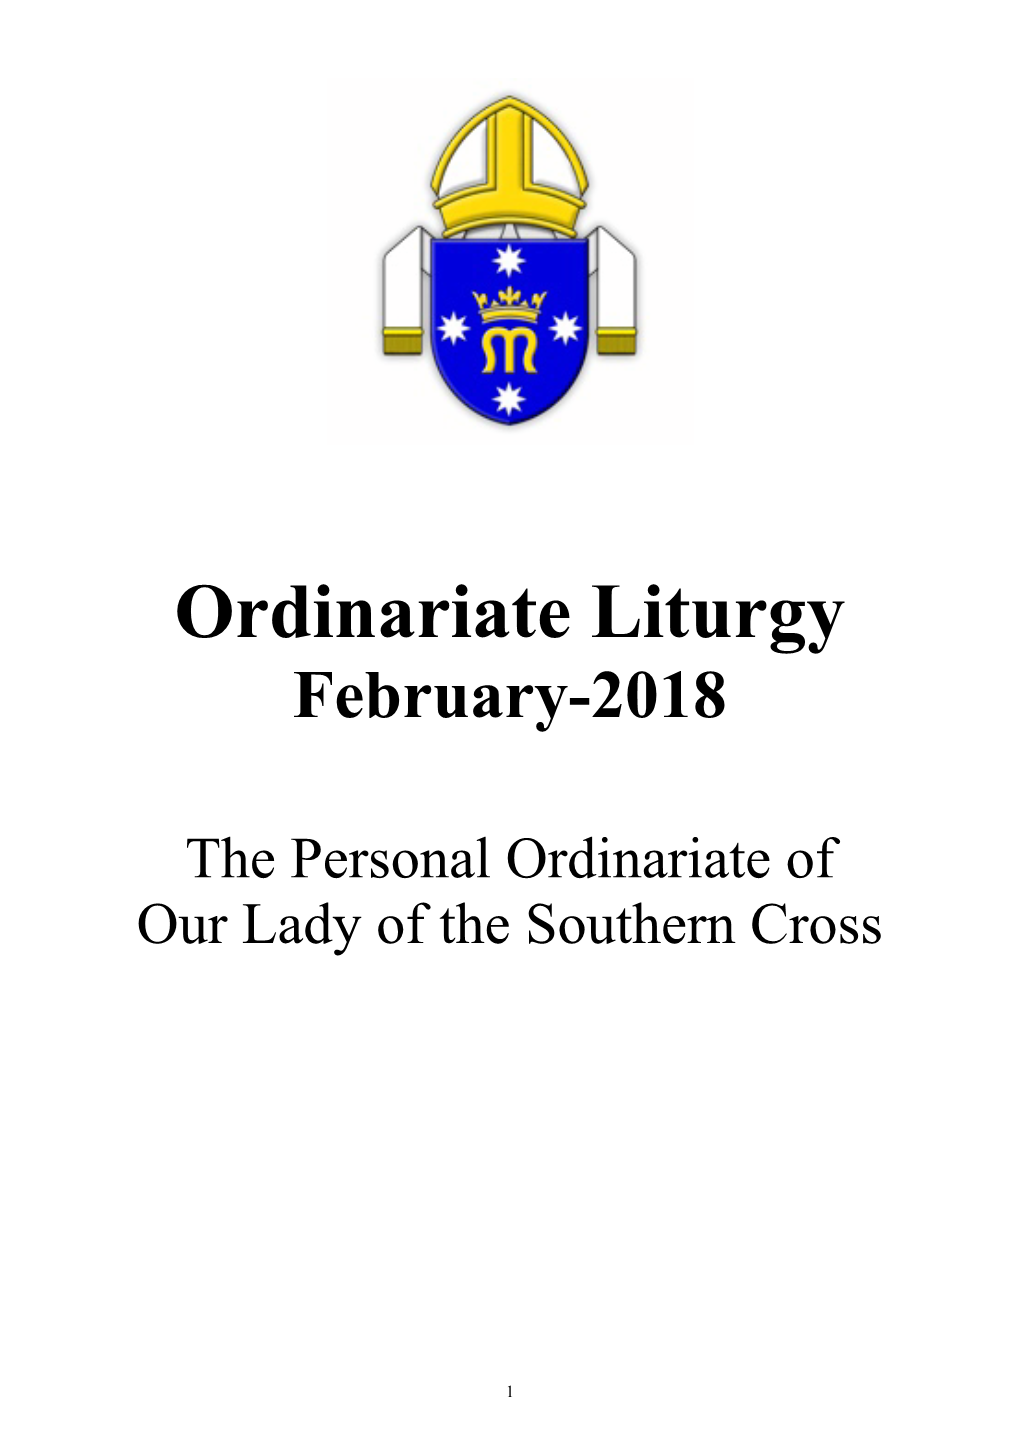 Ordinariate Liturgy February-2018